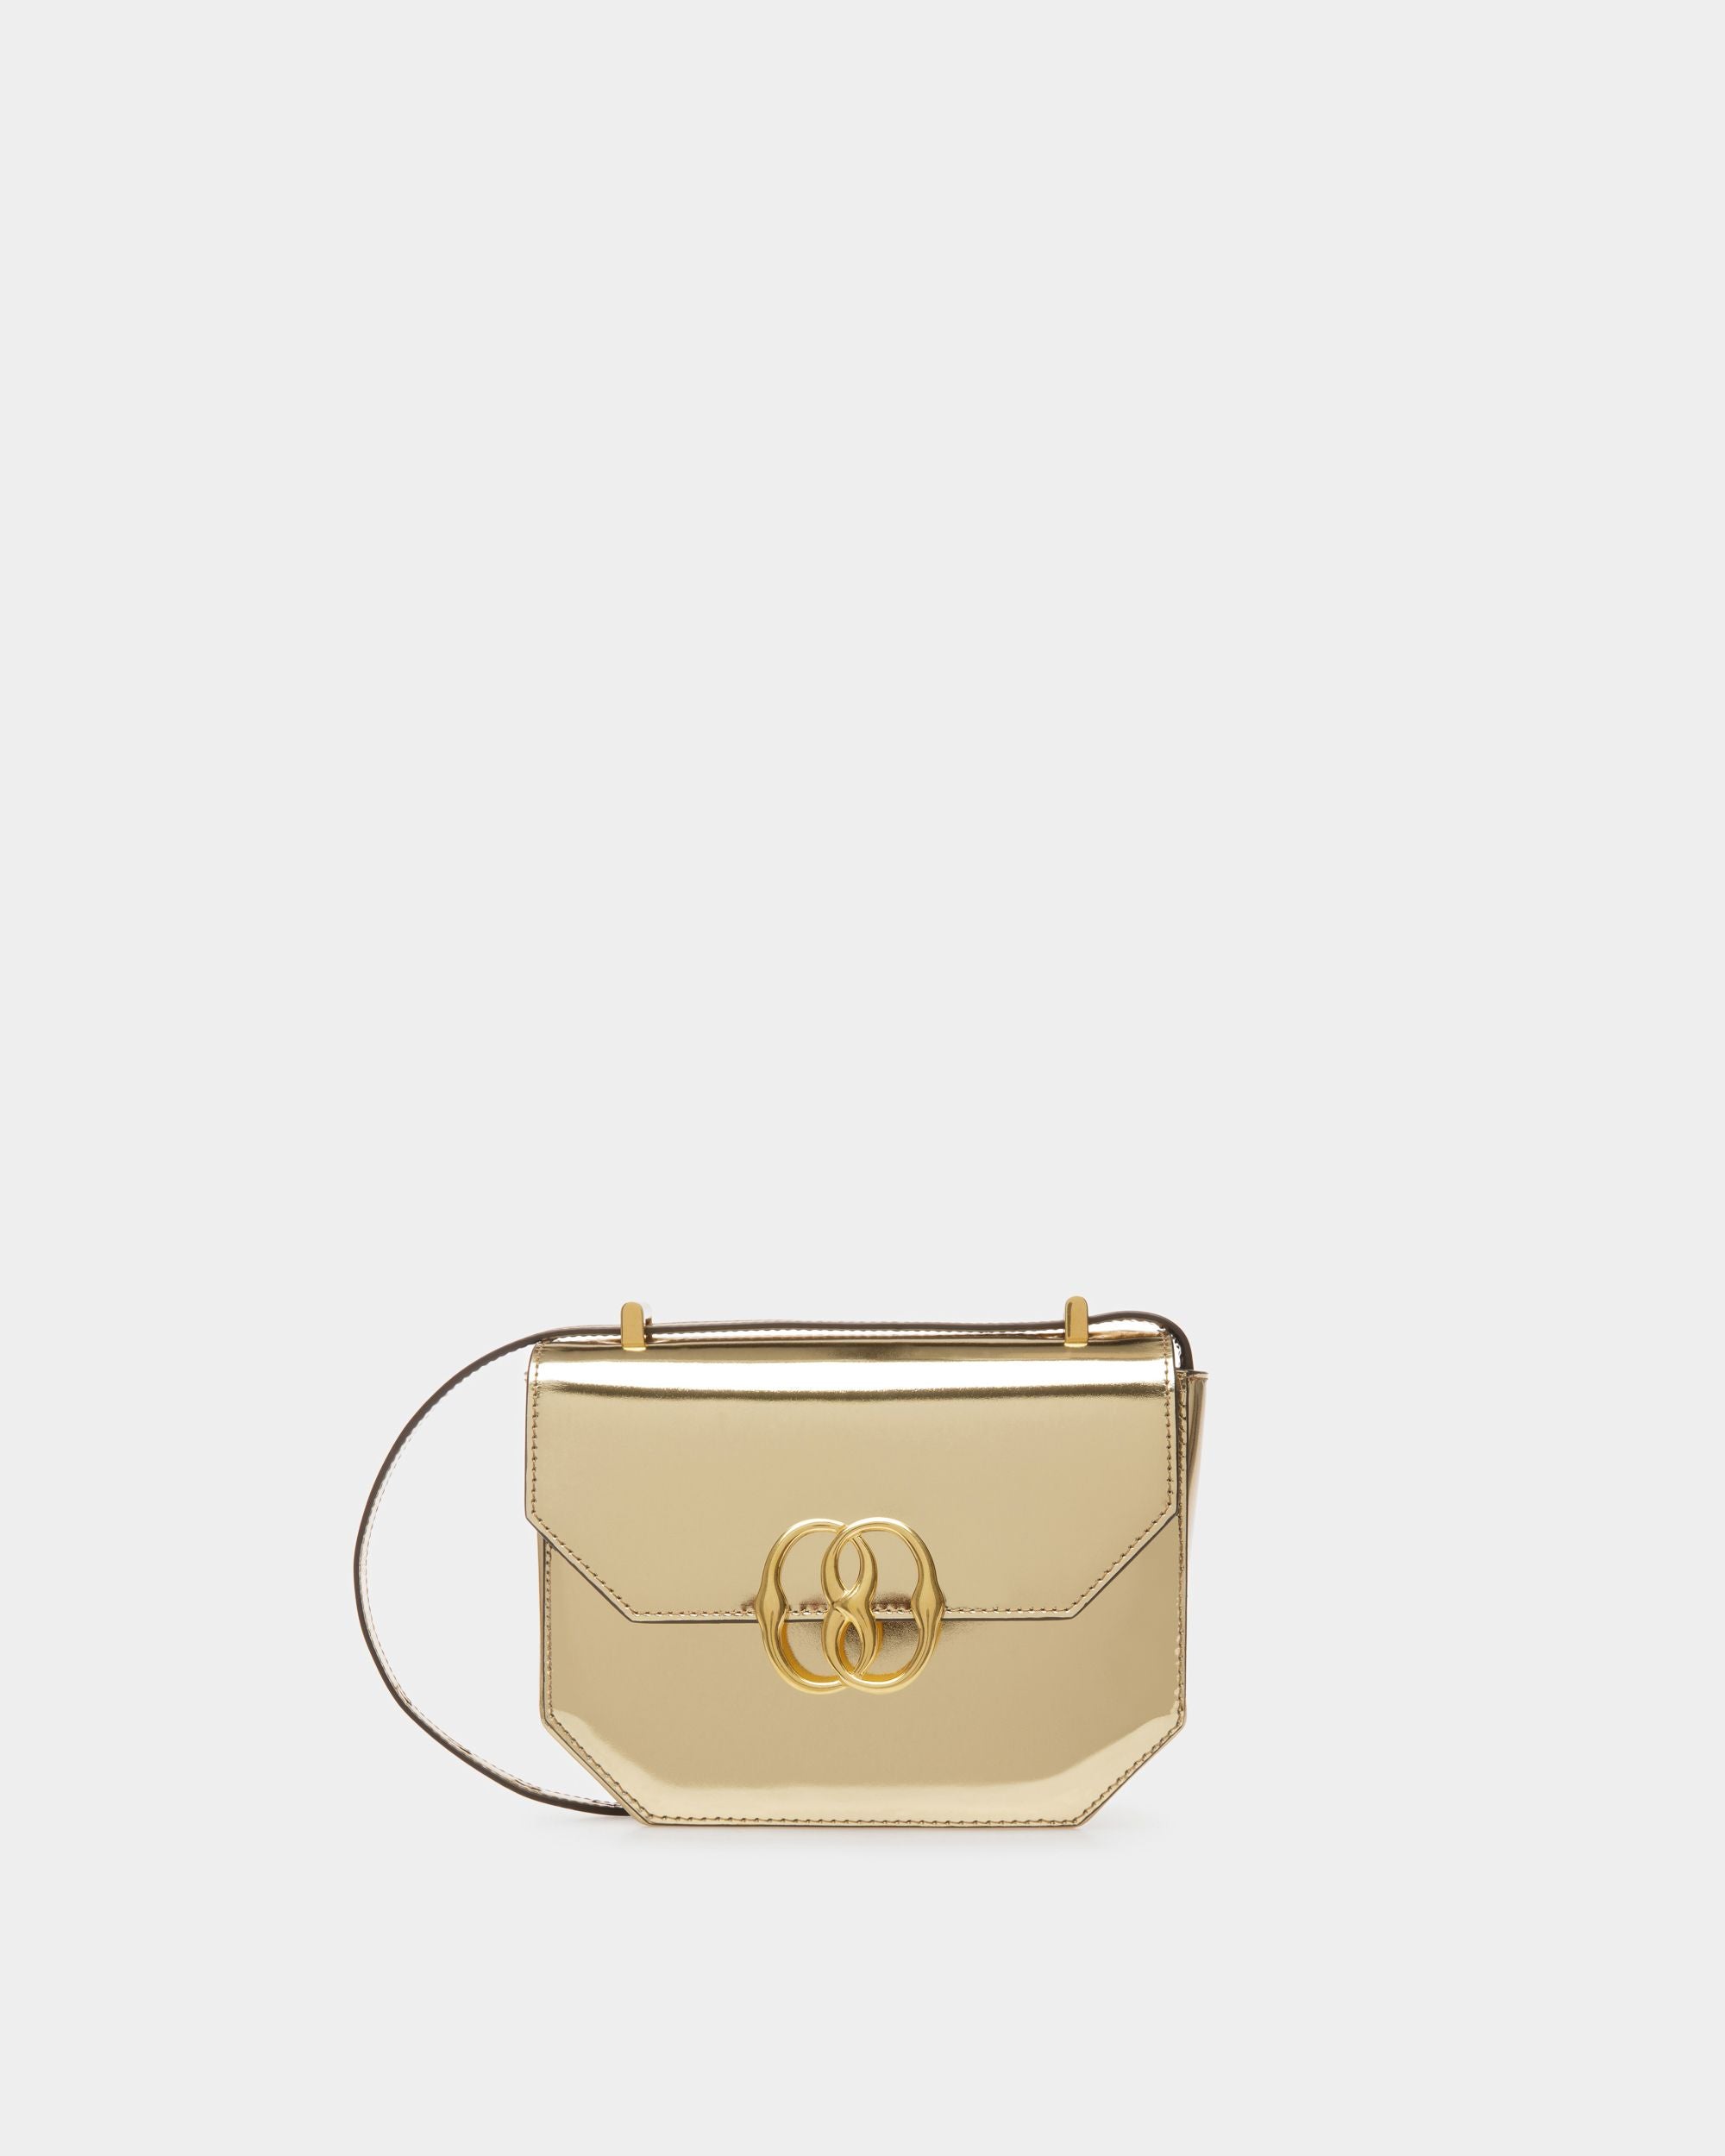 Emblem Folio Minibag | Women's Minibag | Brown Leather | Bally | Still Life Front